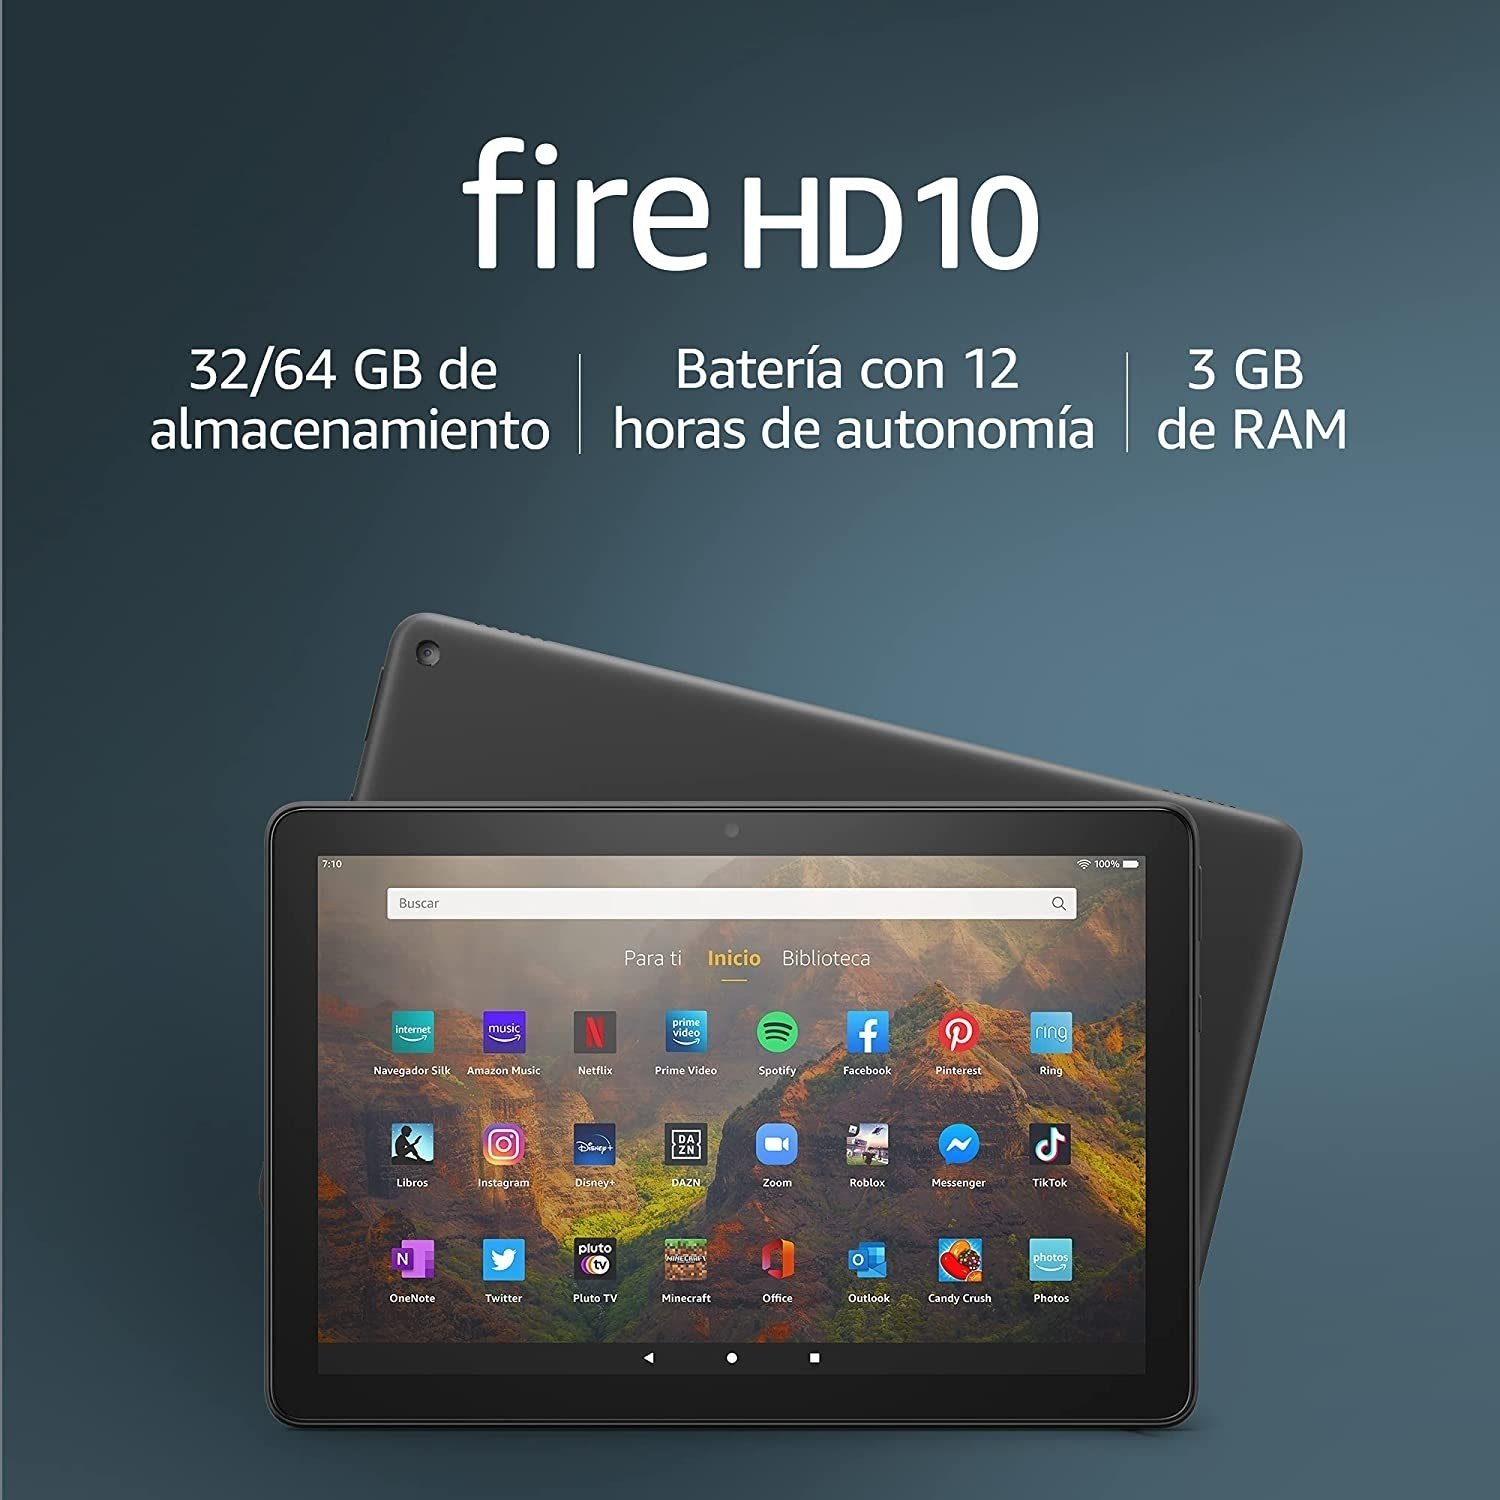 Amazon Fire HD 10, presentation